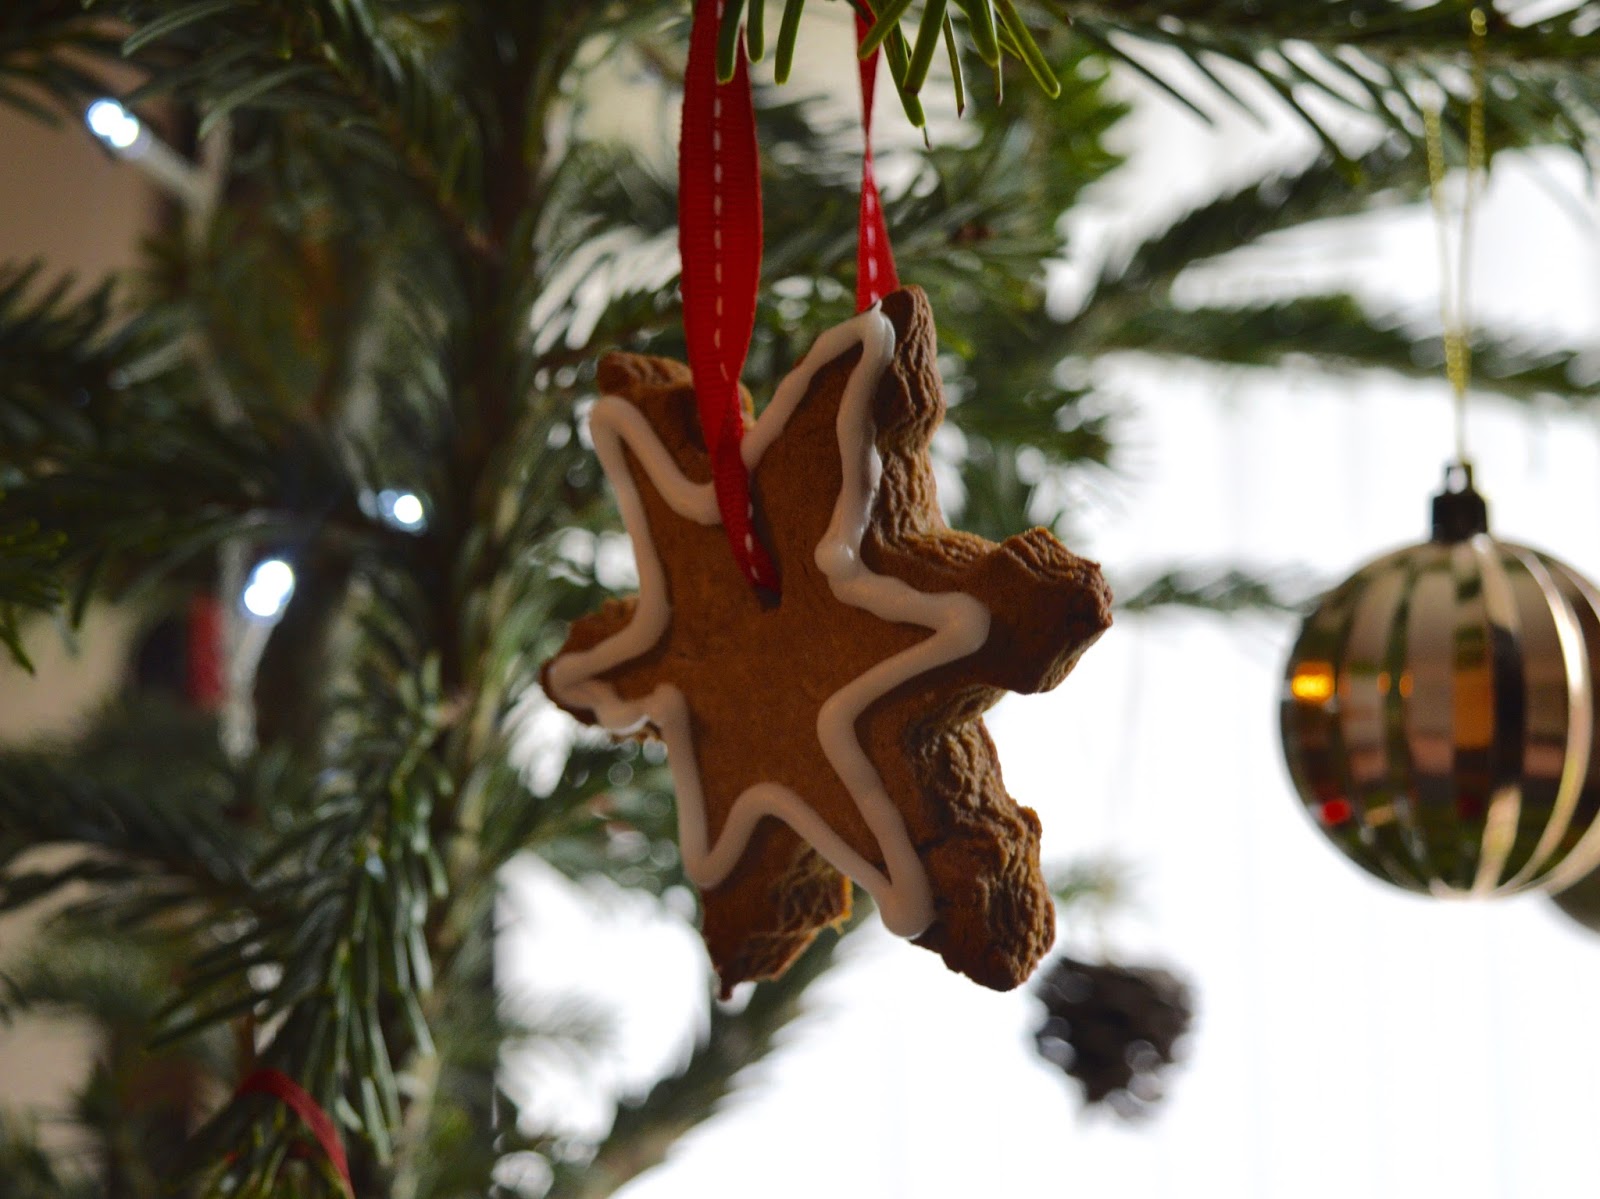 Easy Homemade Gingerbread Christmas Tree Decorations | A Recipe - gingerbread decorations on Christmas tree